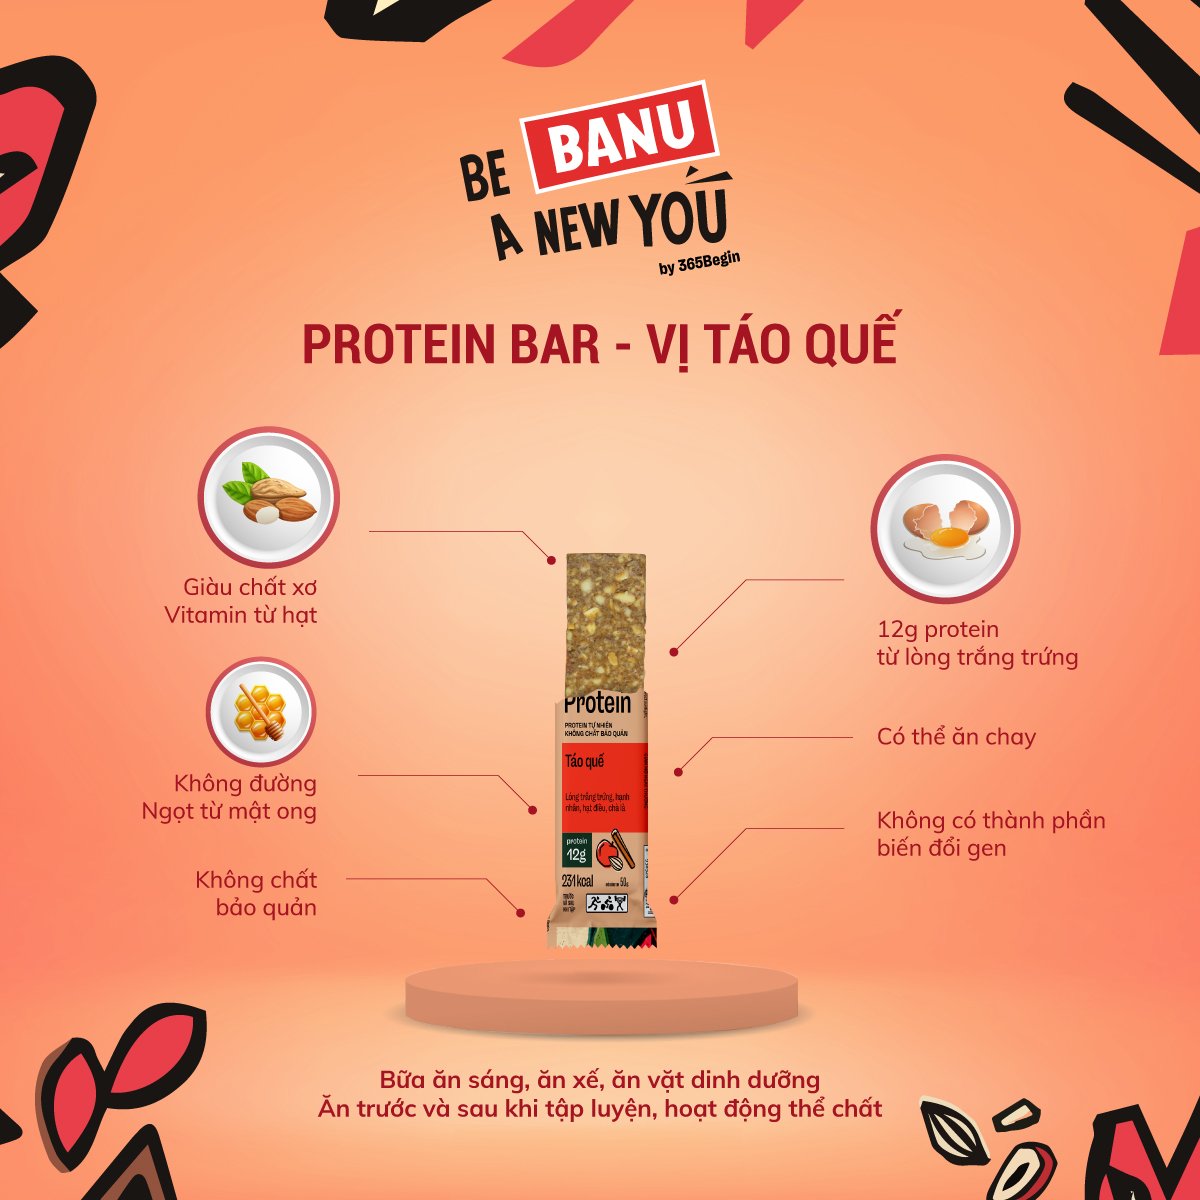 thanh nang luong protein Banu tao que 1 Thanh Protein Banu - Táo quế - YCB.vn